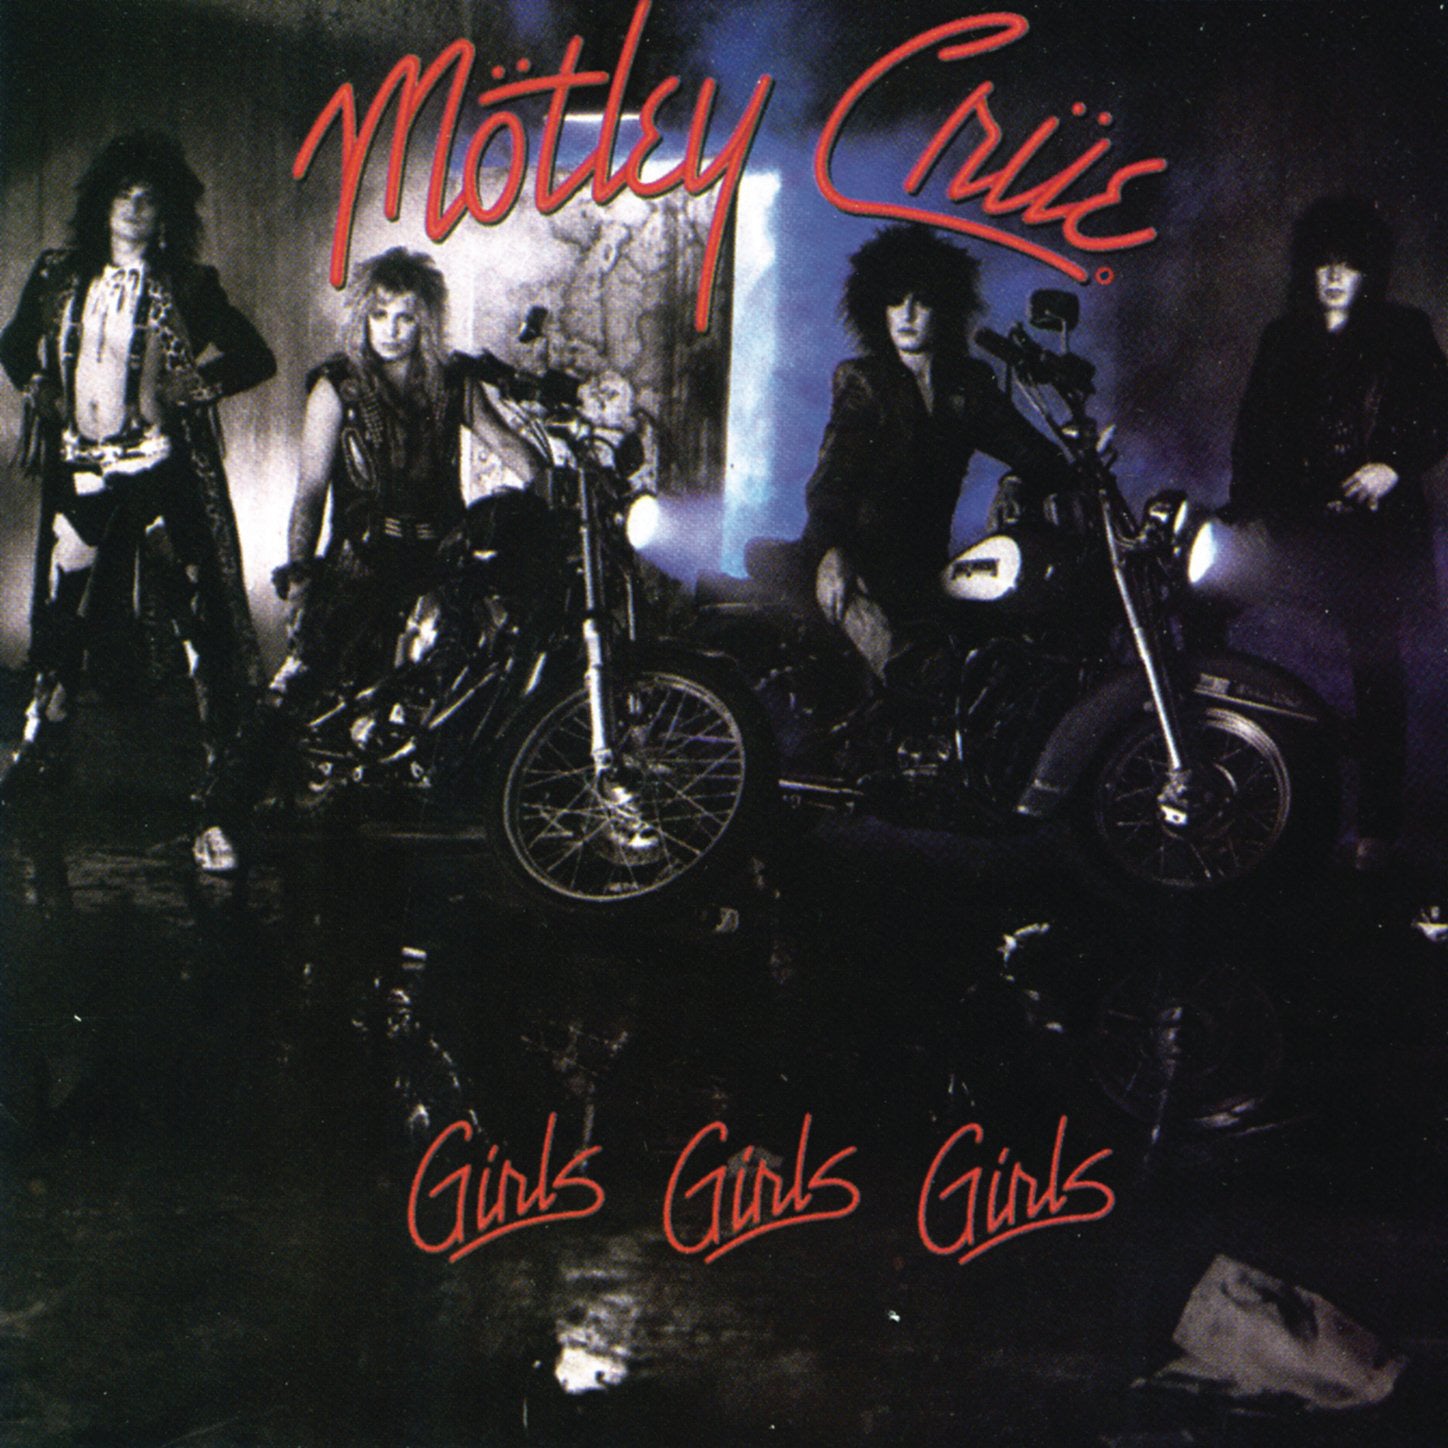 Motley Crue - Girls Girls Girls